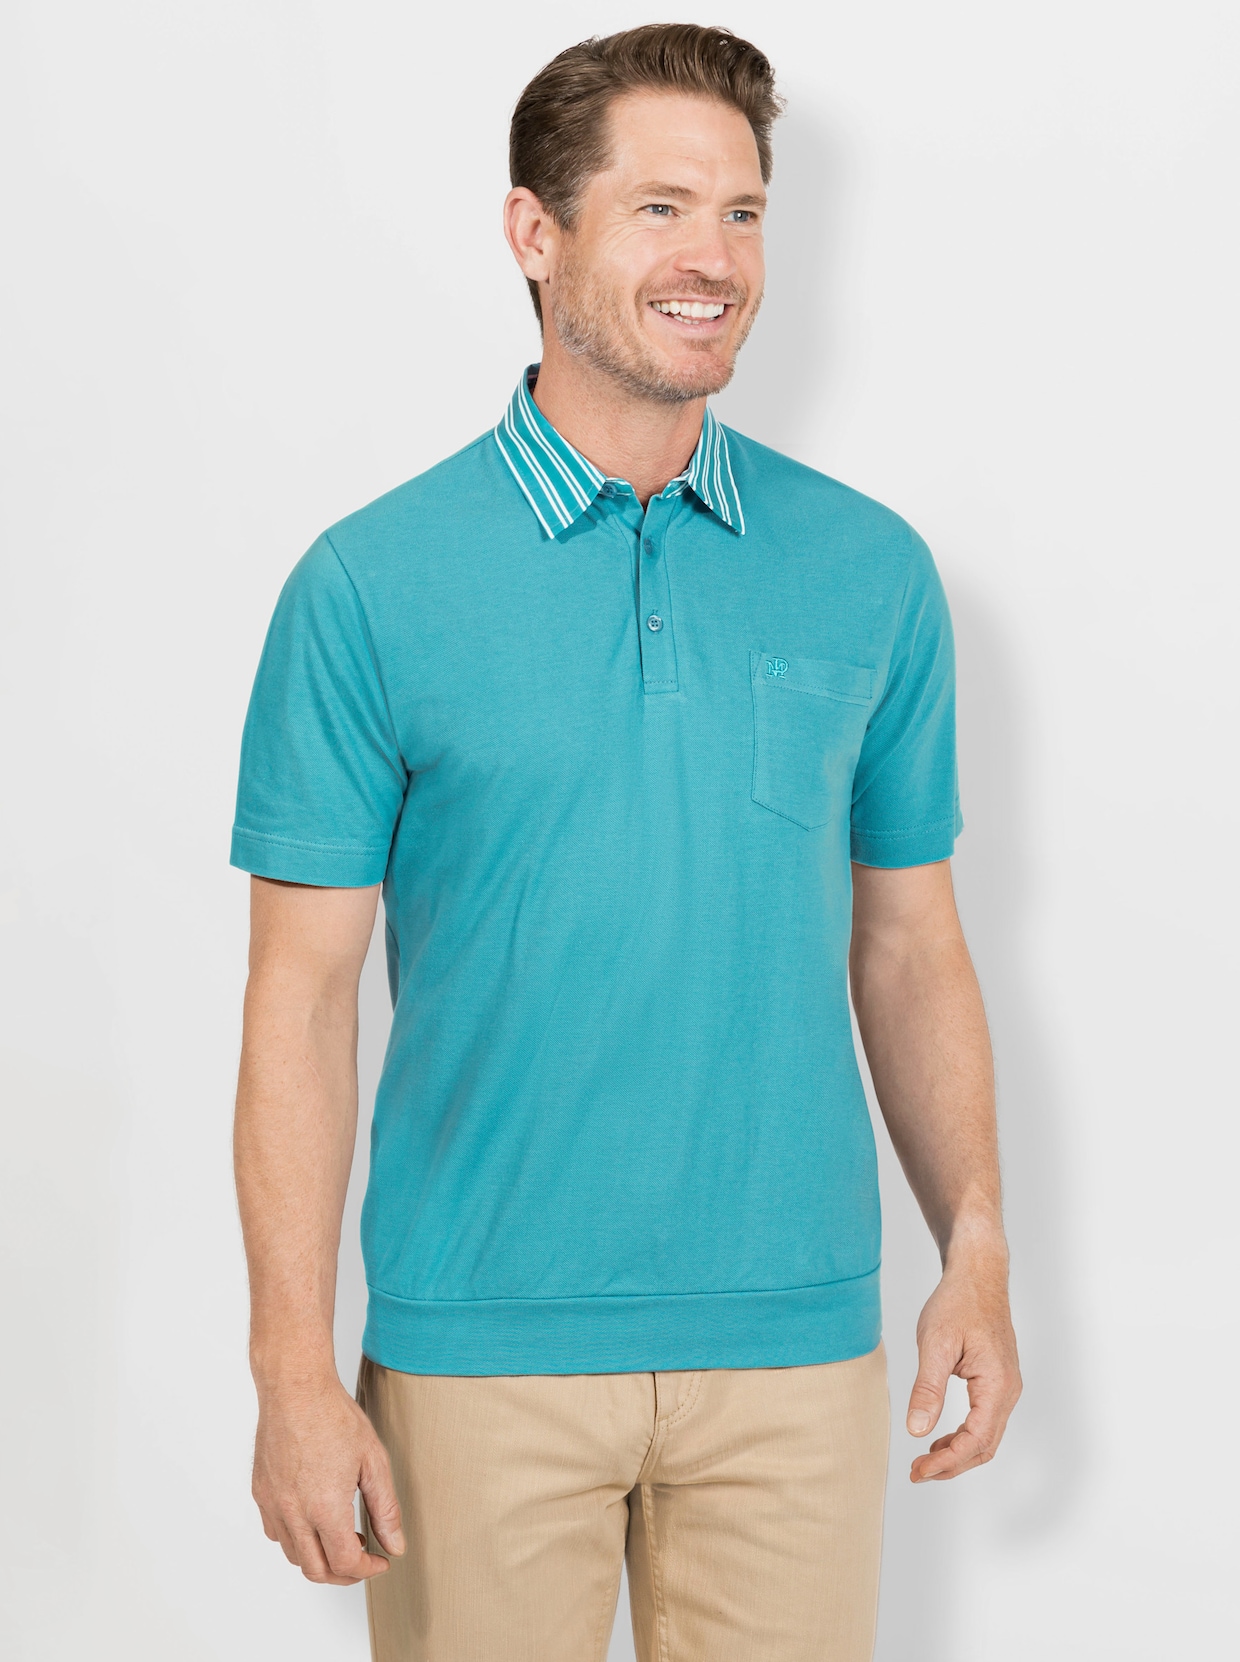 Marco Donati Shirt met korte mouwen - turquoise